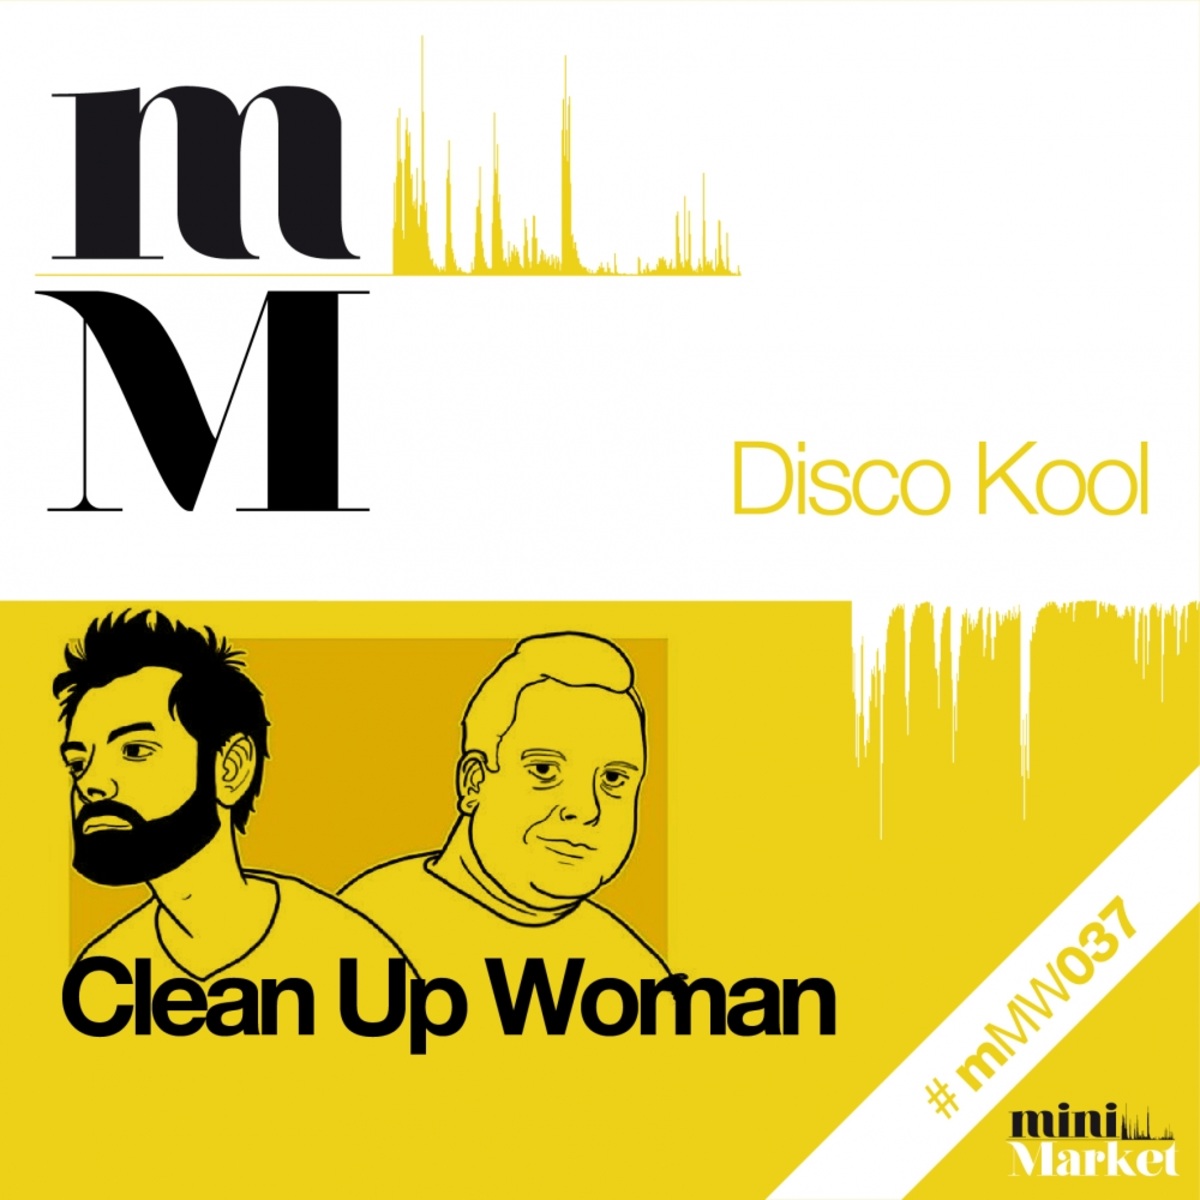 Disco Kool - Clean Up Woman / miniMarket